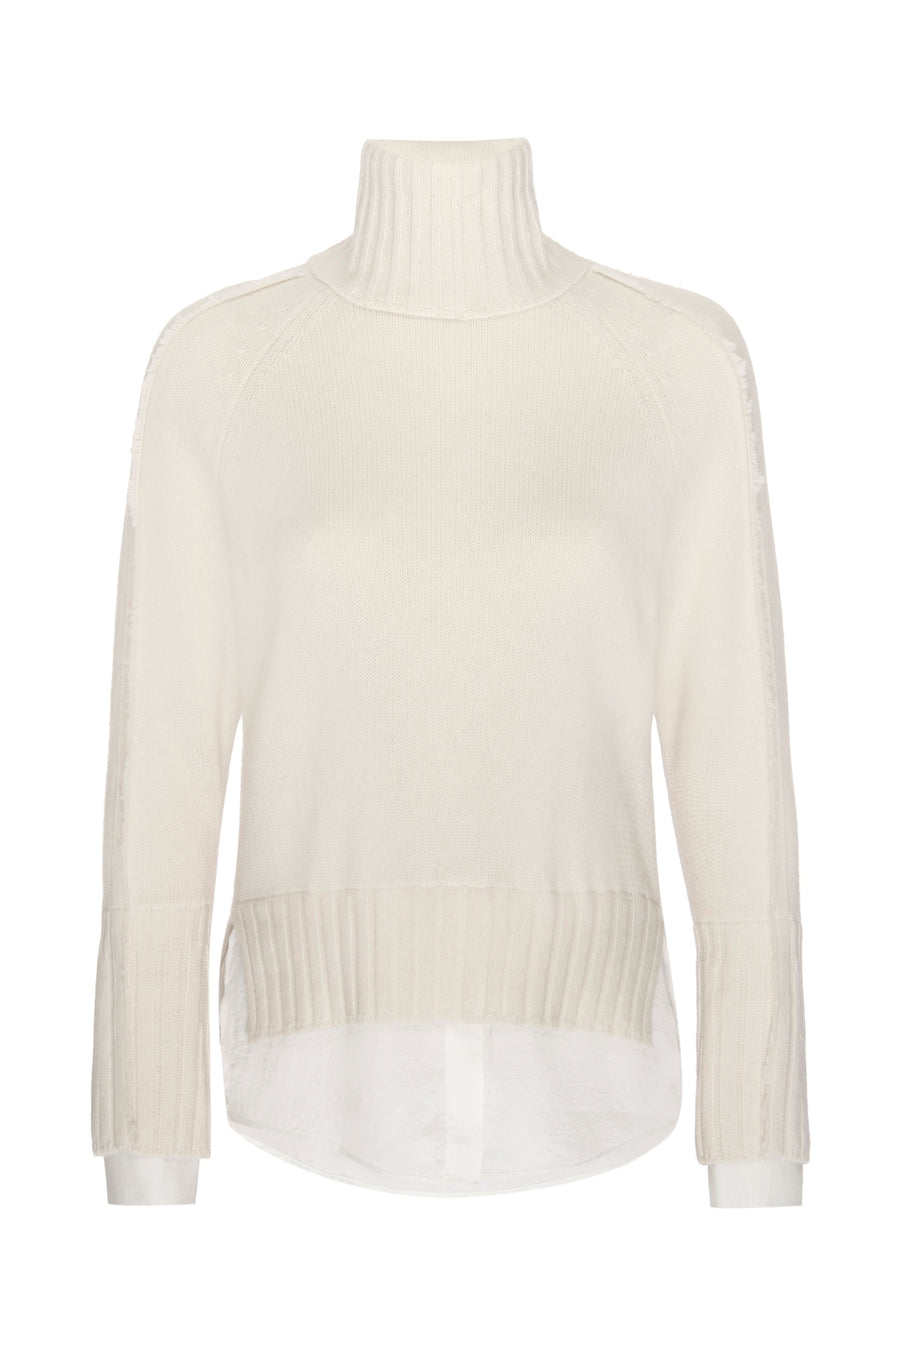 Jolie white layered turtleneck sweater flat view